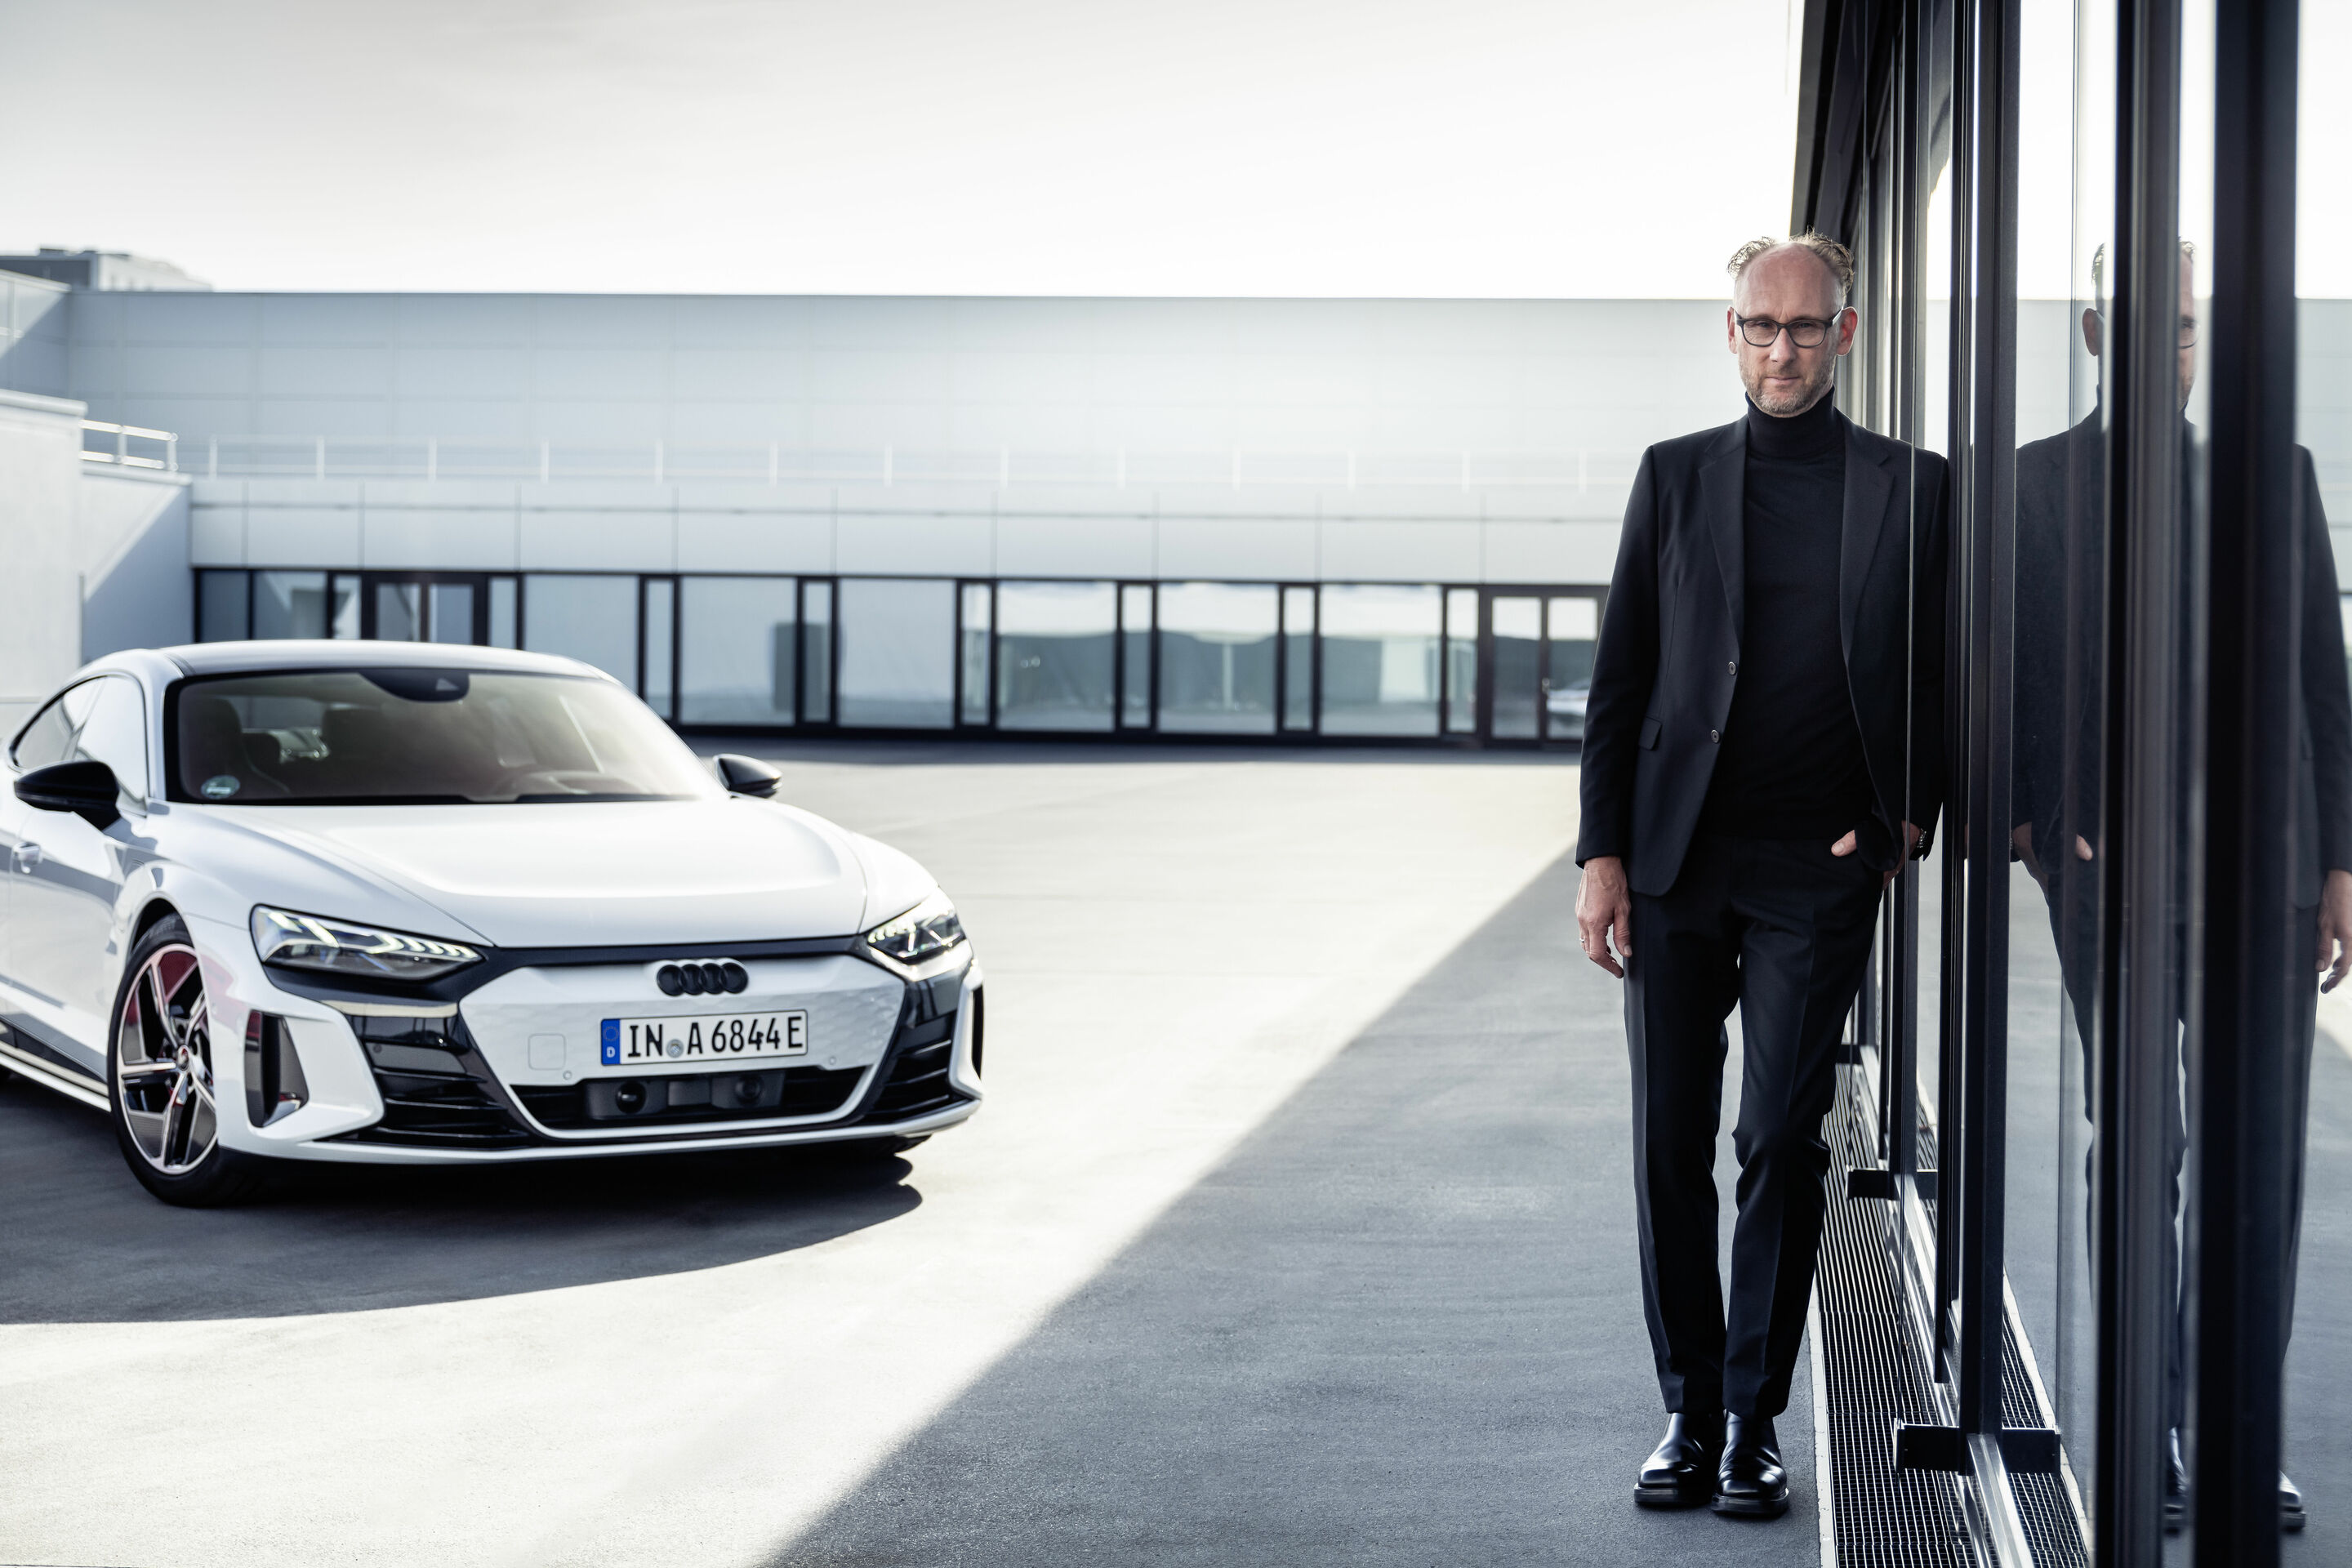 Audi Sport GmbH - 40th anniversary insights